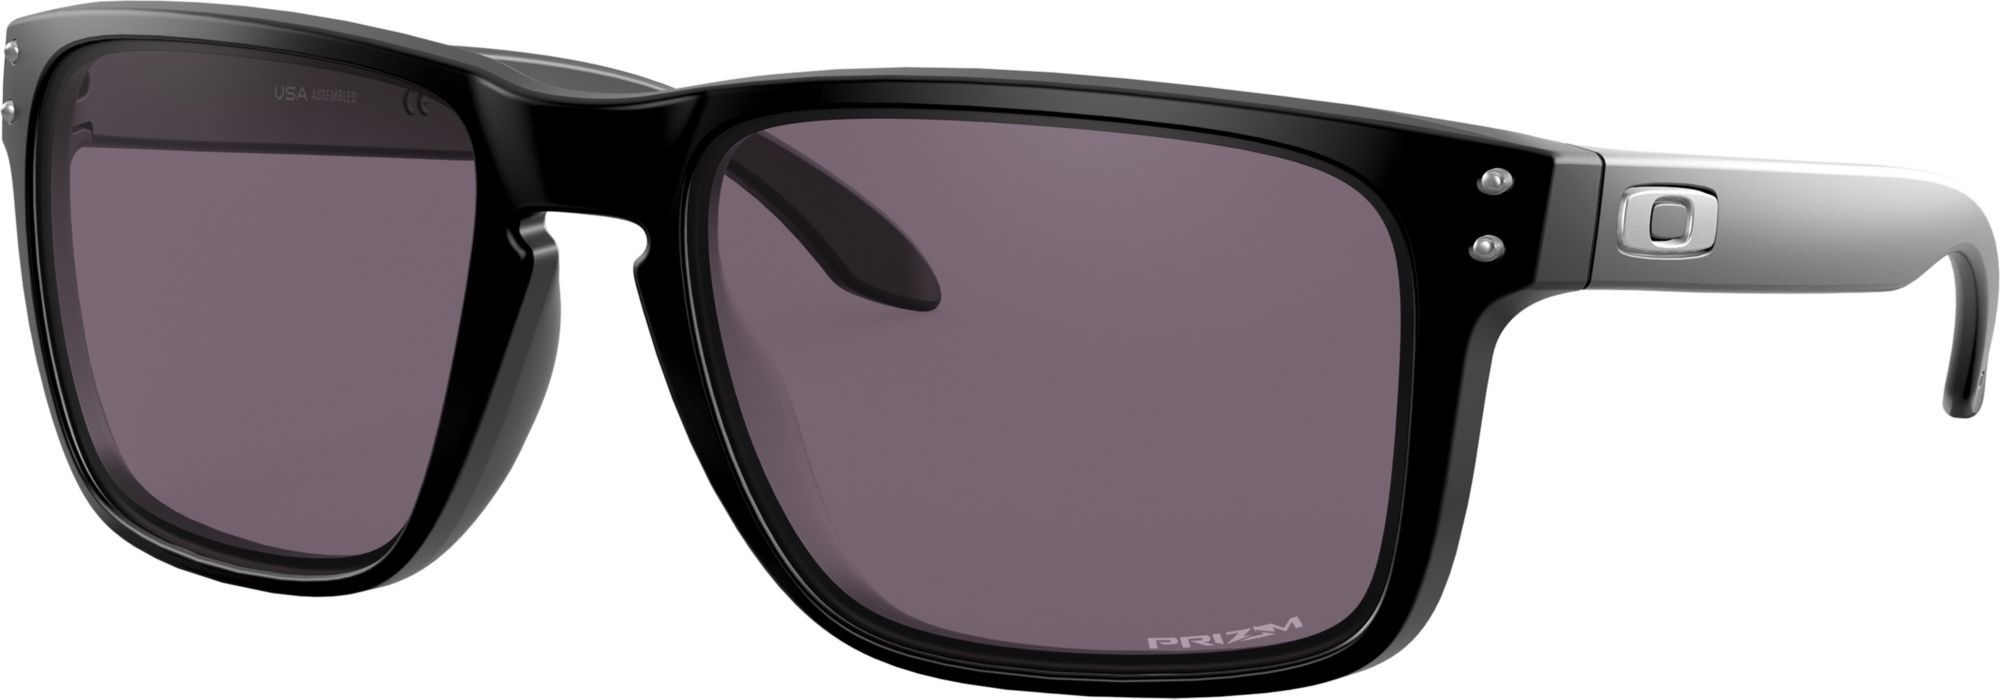 Photos - Sunglasses Oakley Holbrook XL , Men's, Black/Grey | Father's Day Gift Idea 